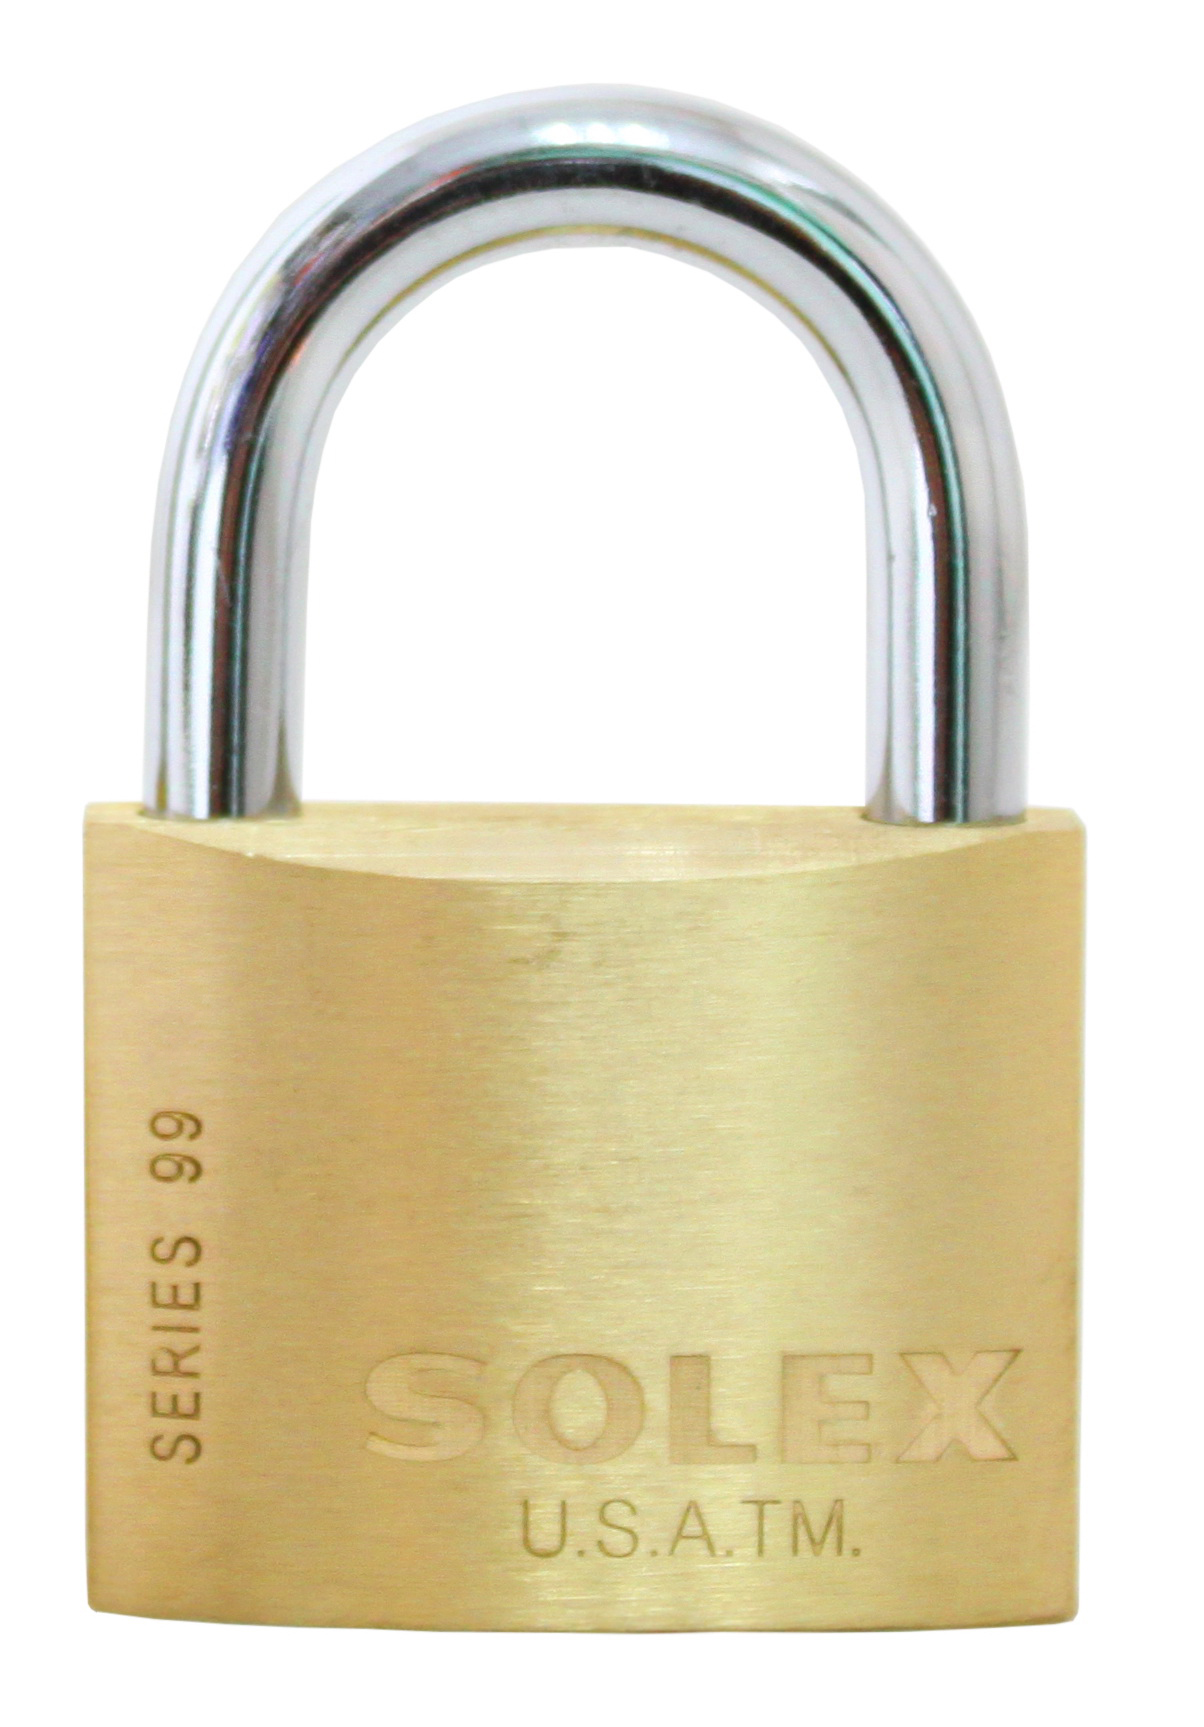 SOLEXกุญแจคล้องสายยู รุ่น SL 99 60 MM.(งวงสั้น)